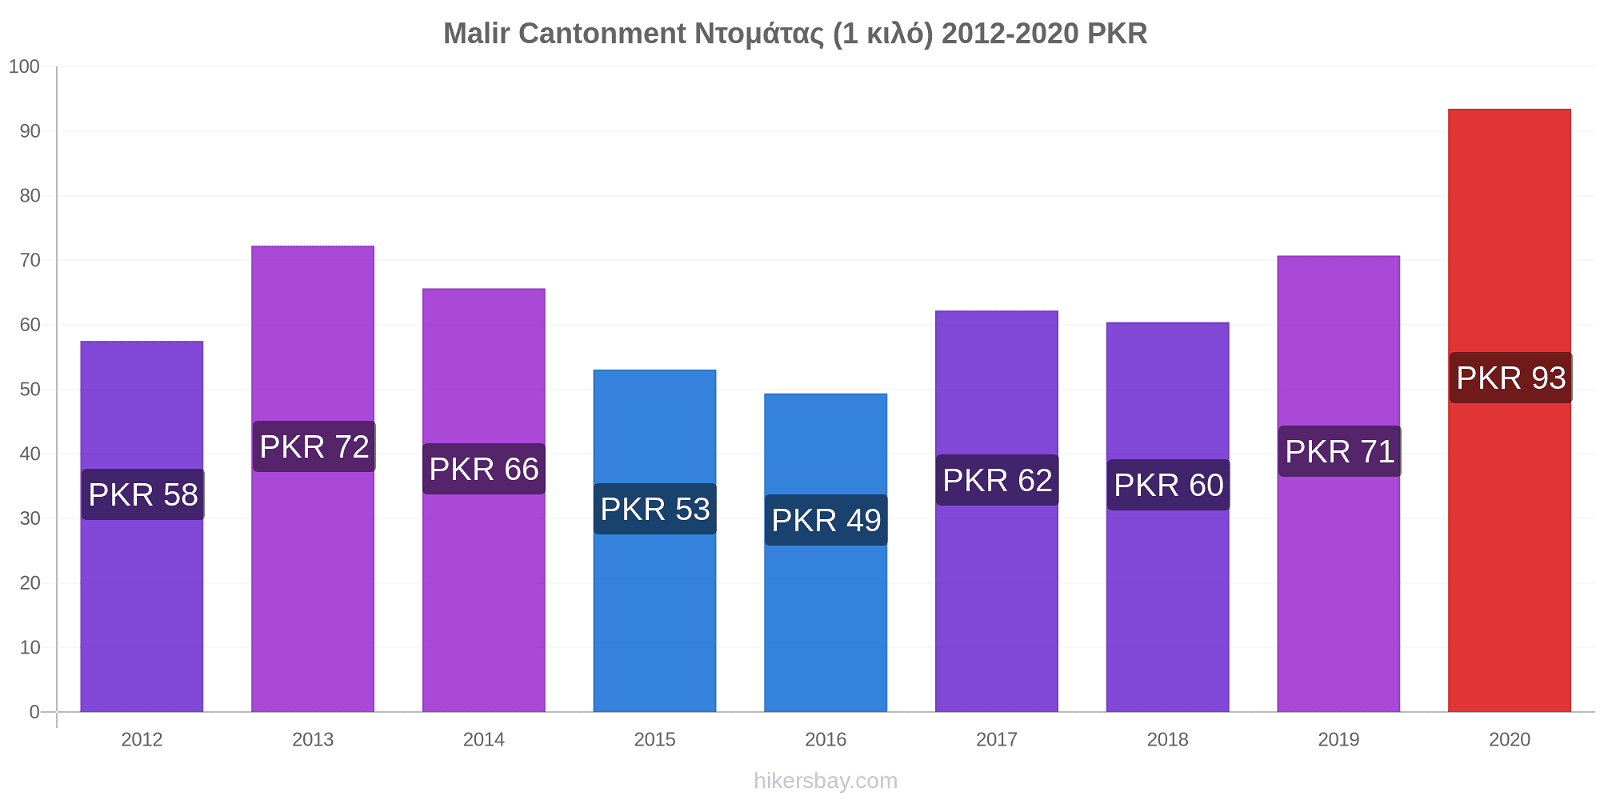 Malir Cantonment αλλαγές τιμών Ντομάτας (1 κιλό) hikersbay.com